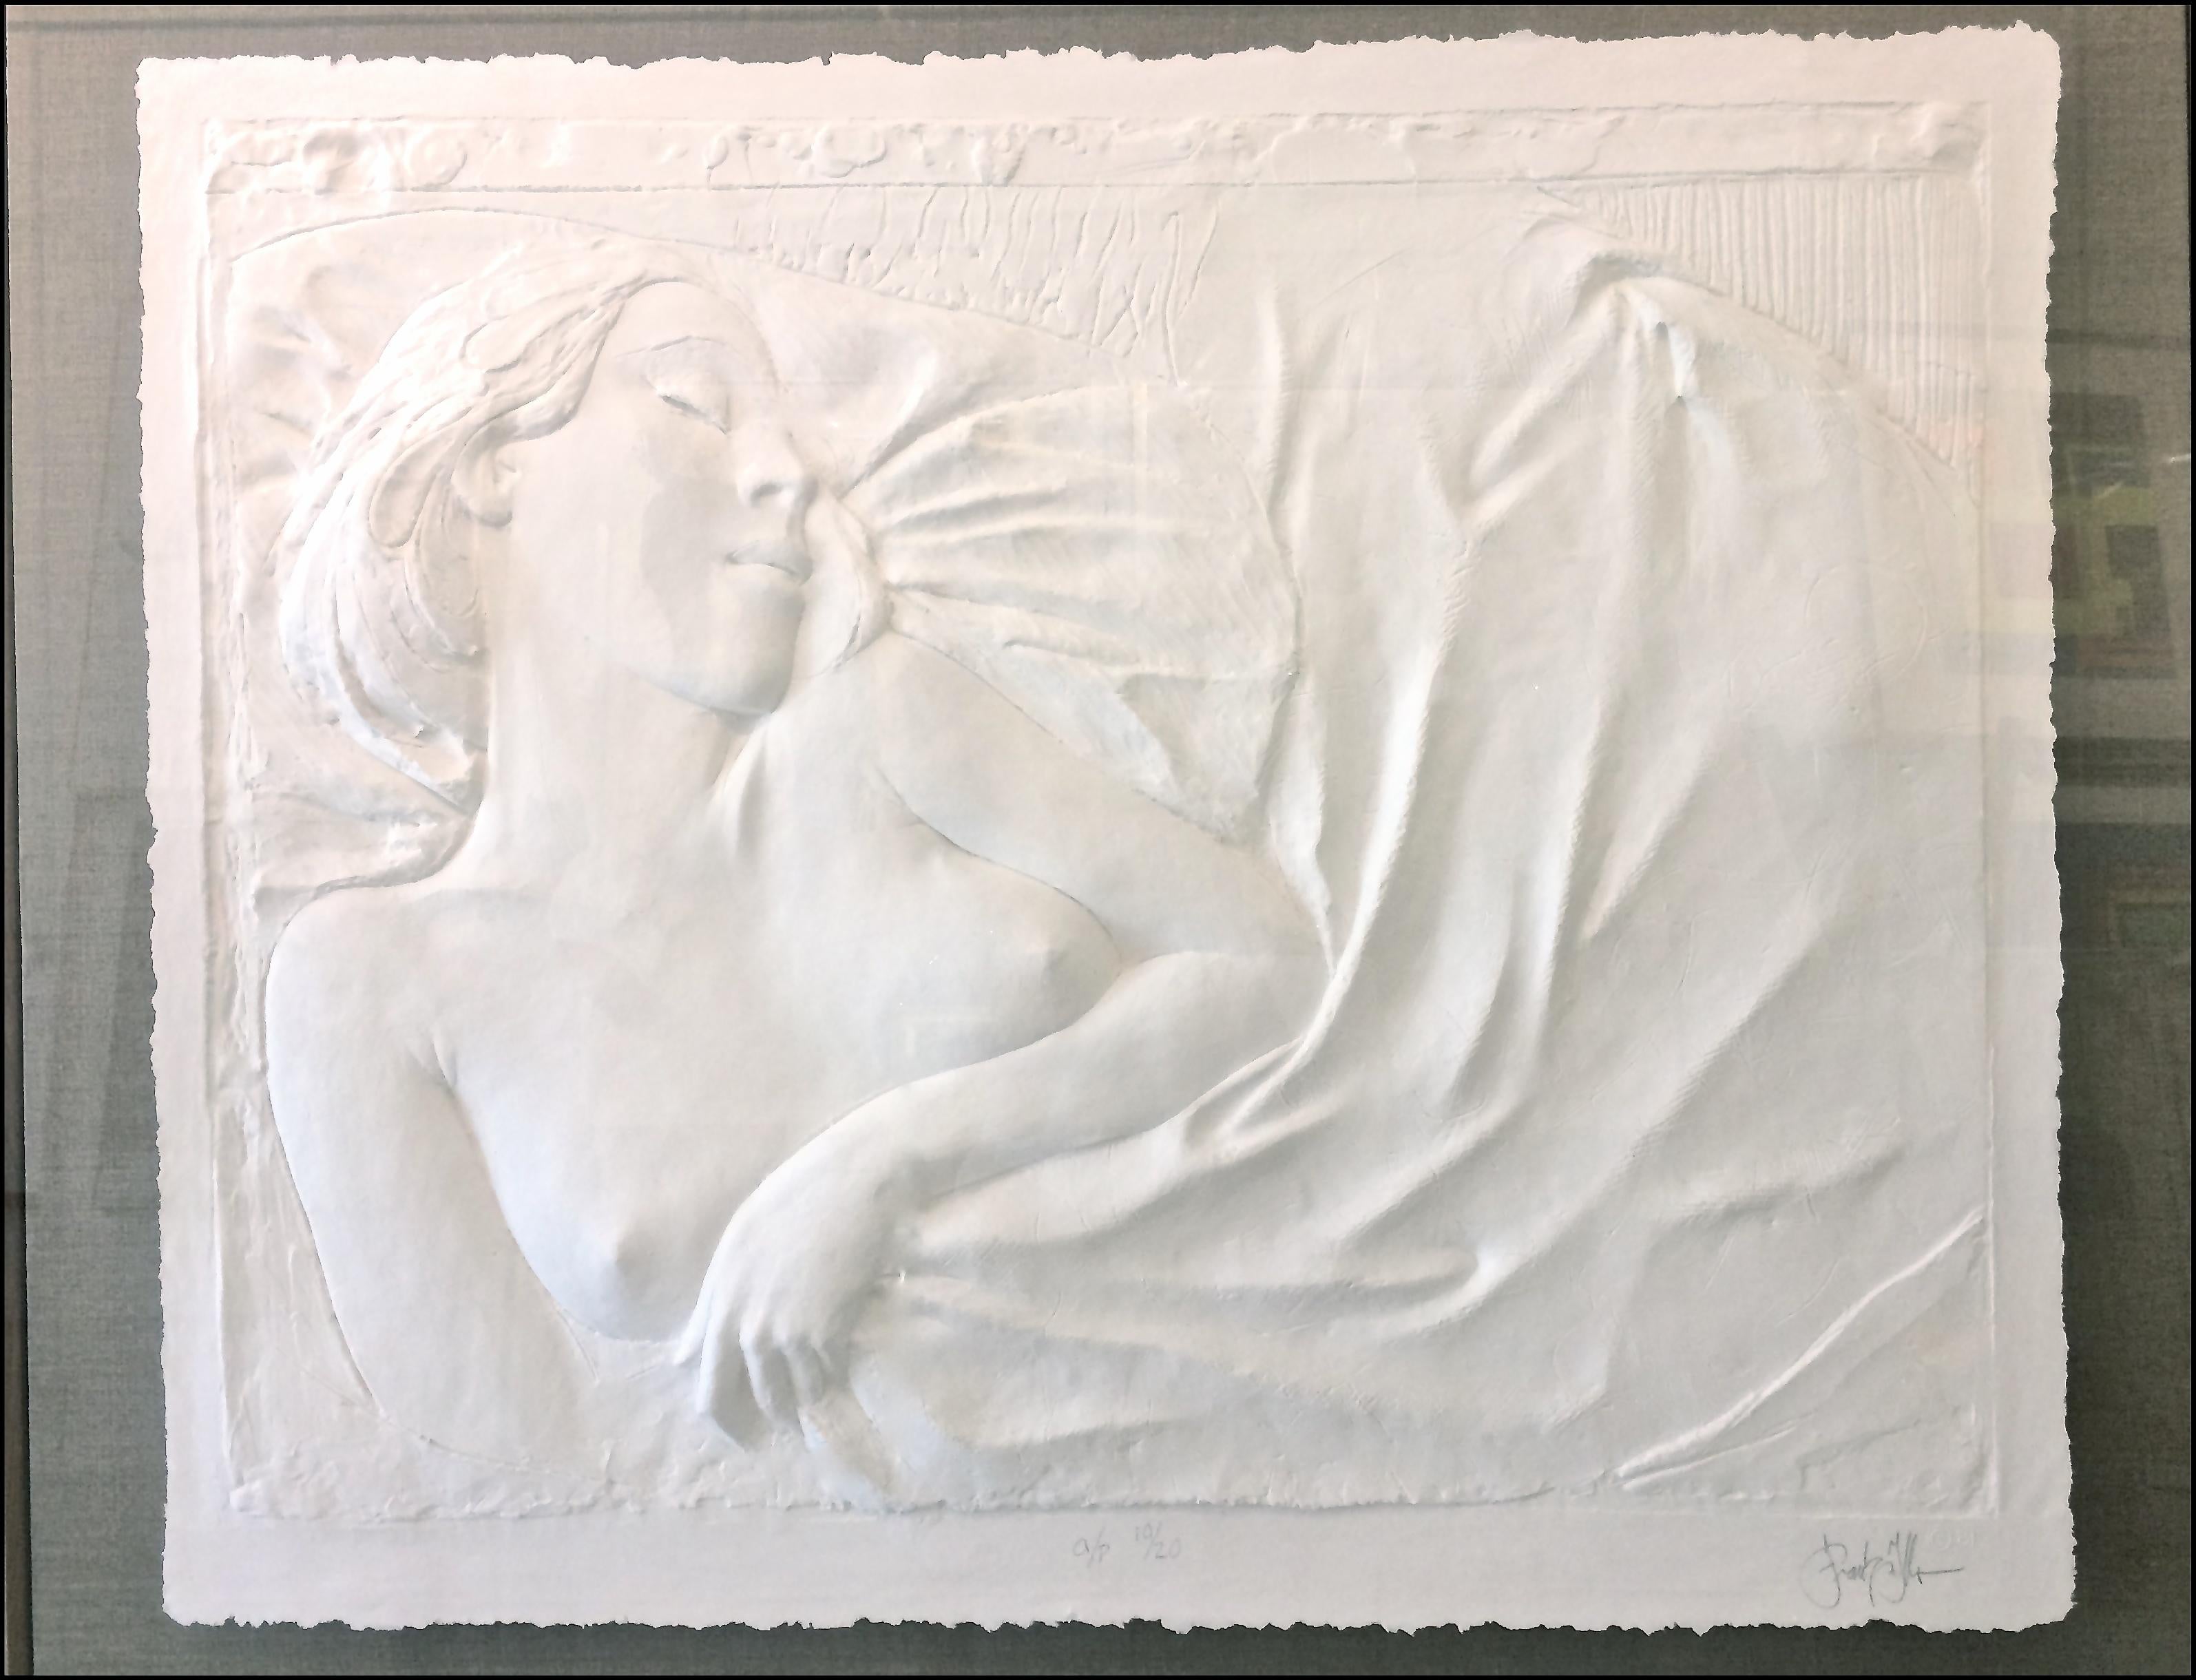  Sleeping Nude Large Wall Art - Mixed Media Art by Frank Gallo